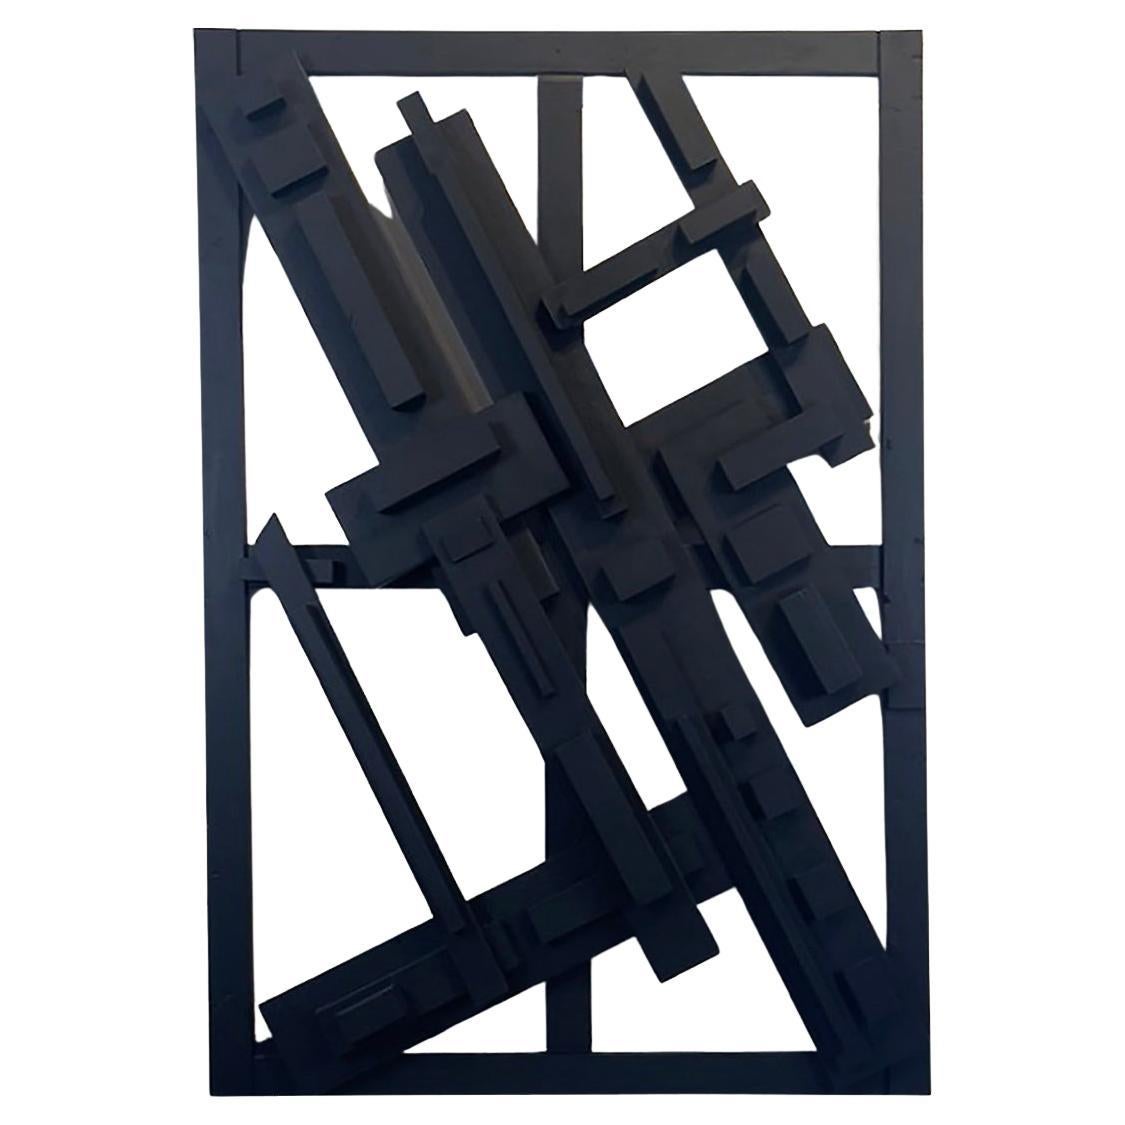 Skyline 31 by Jordan Tabachnik, abstract compositions, brutalist, sculpture For Sale